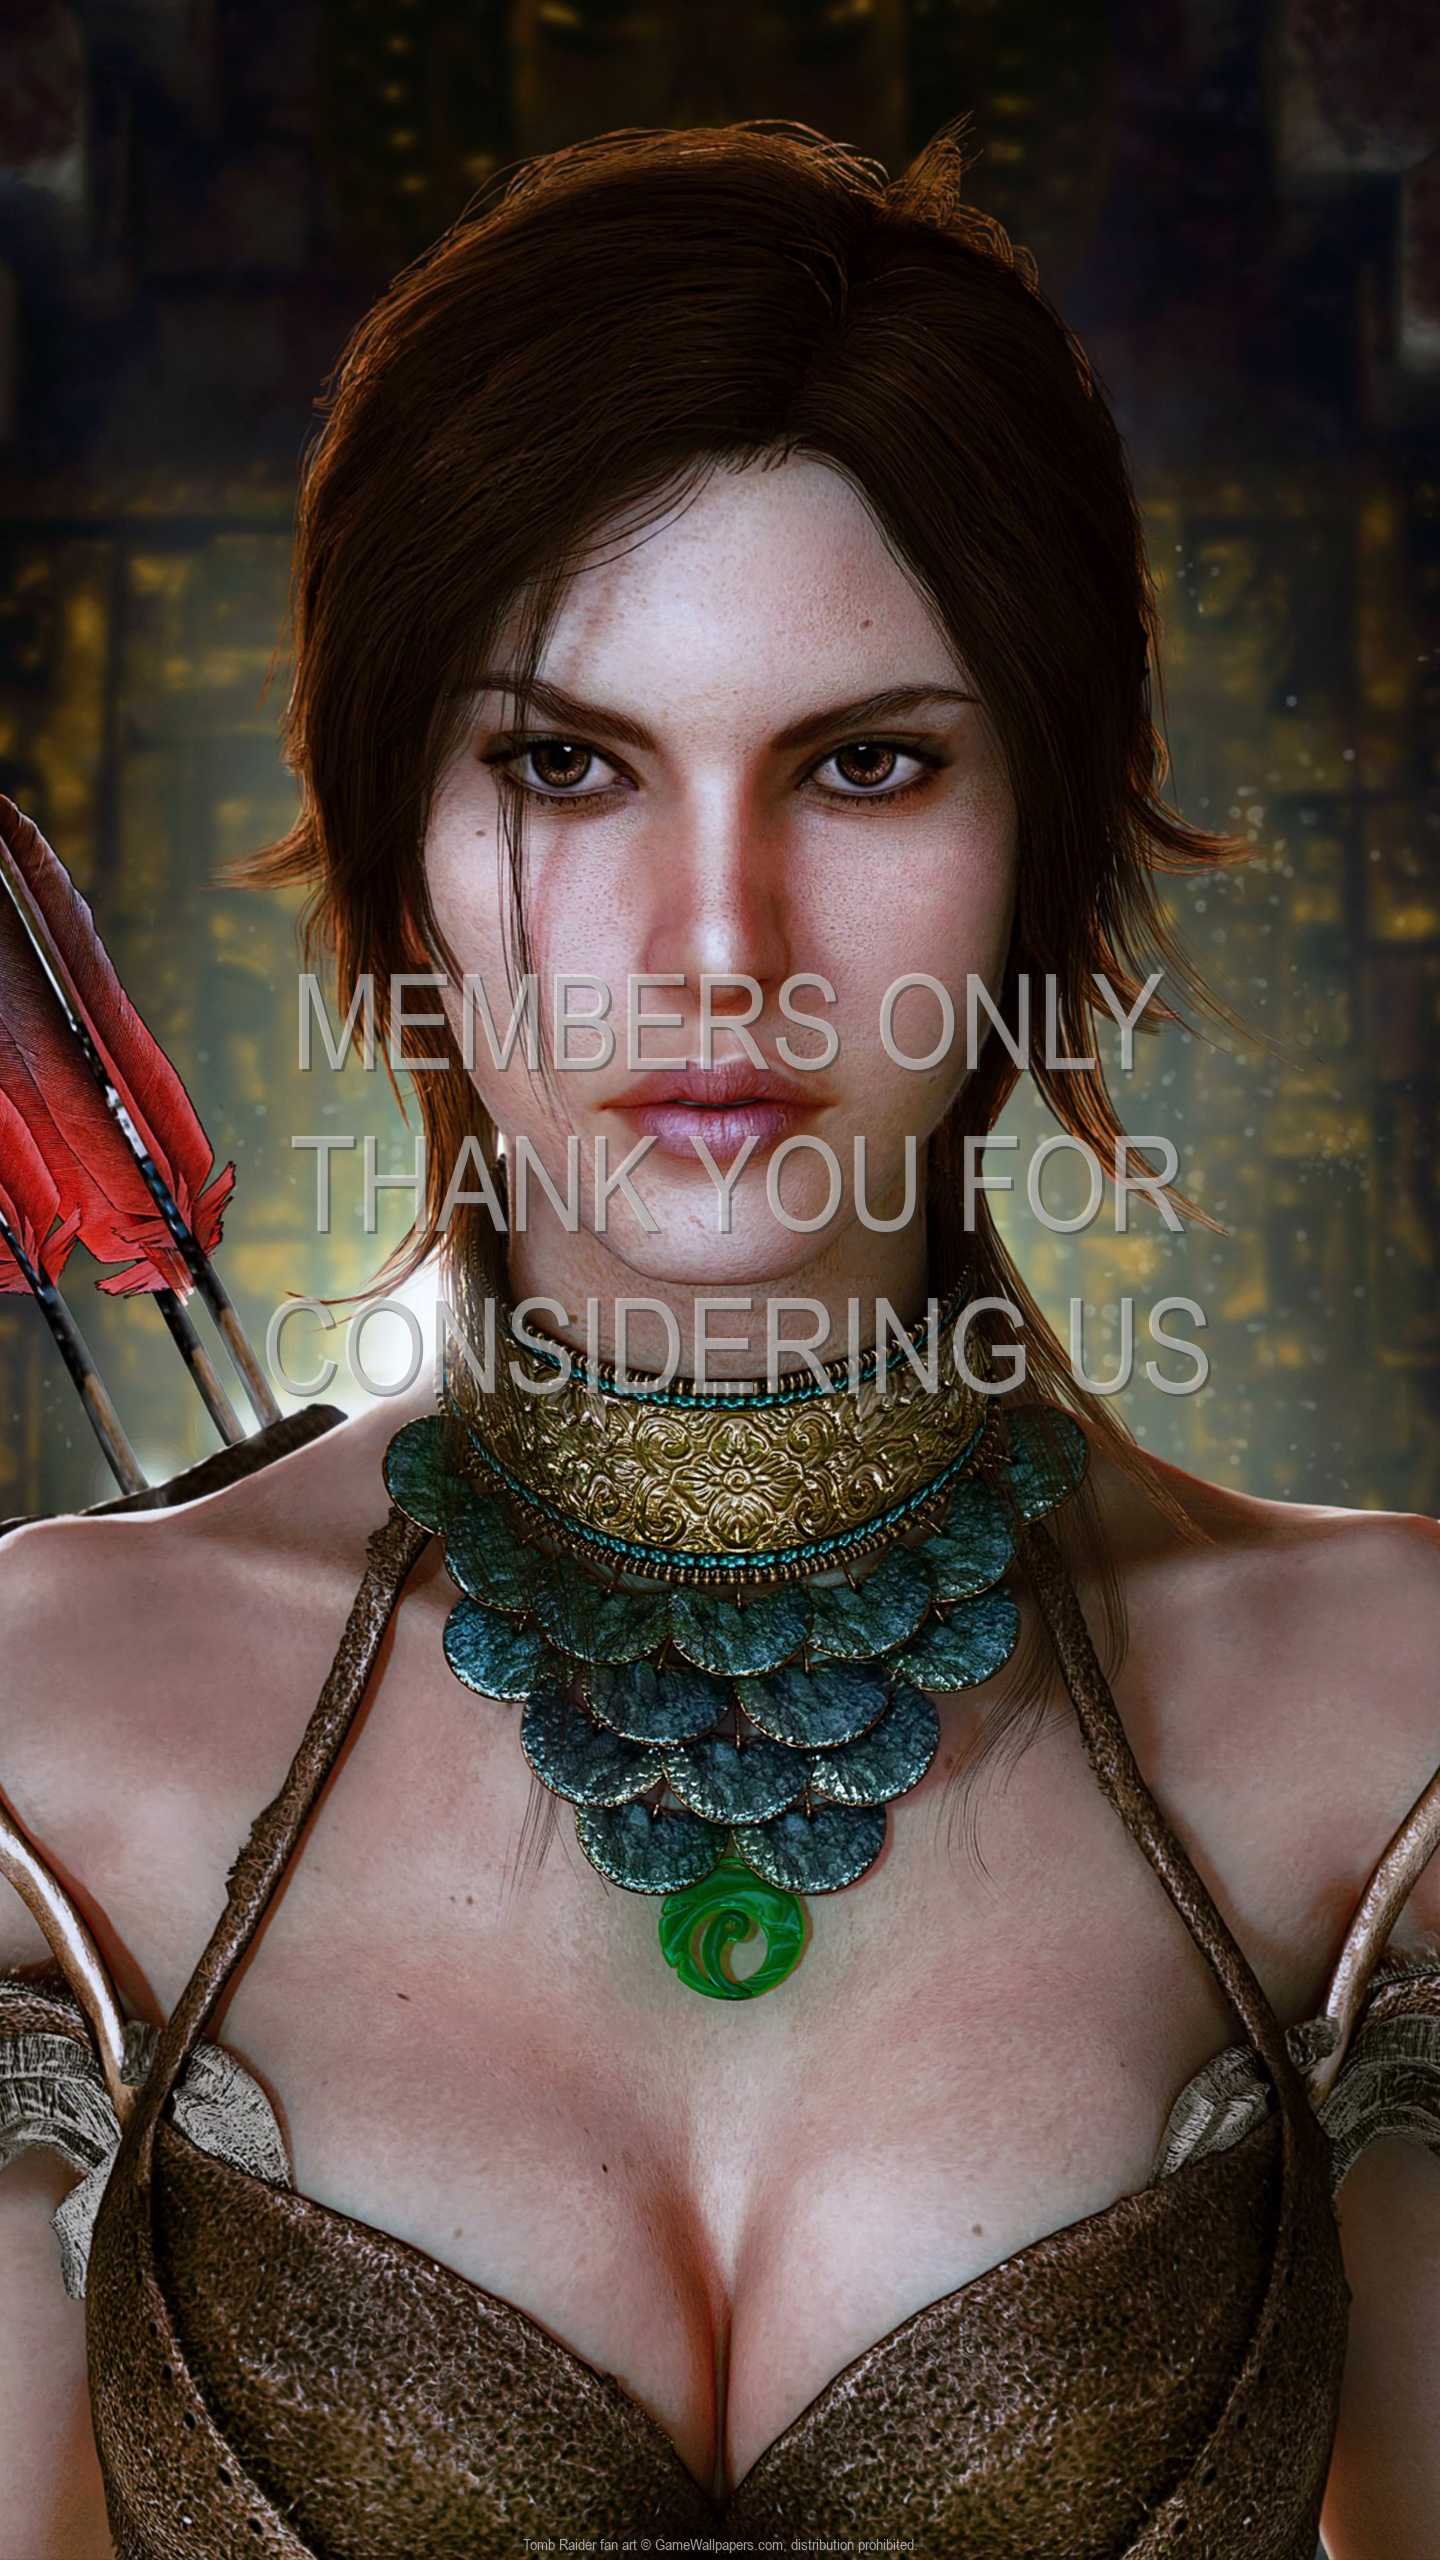 Tomb Raider fan art 1440p%20Vertical Mobile wallpaper or background 10